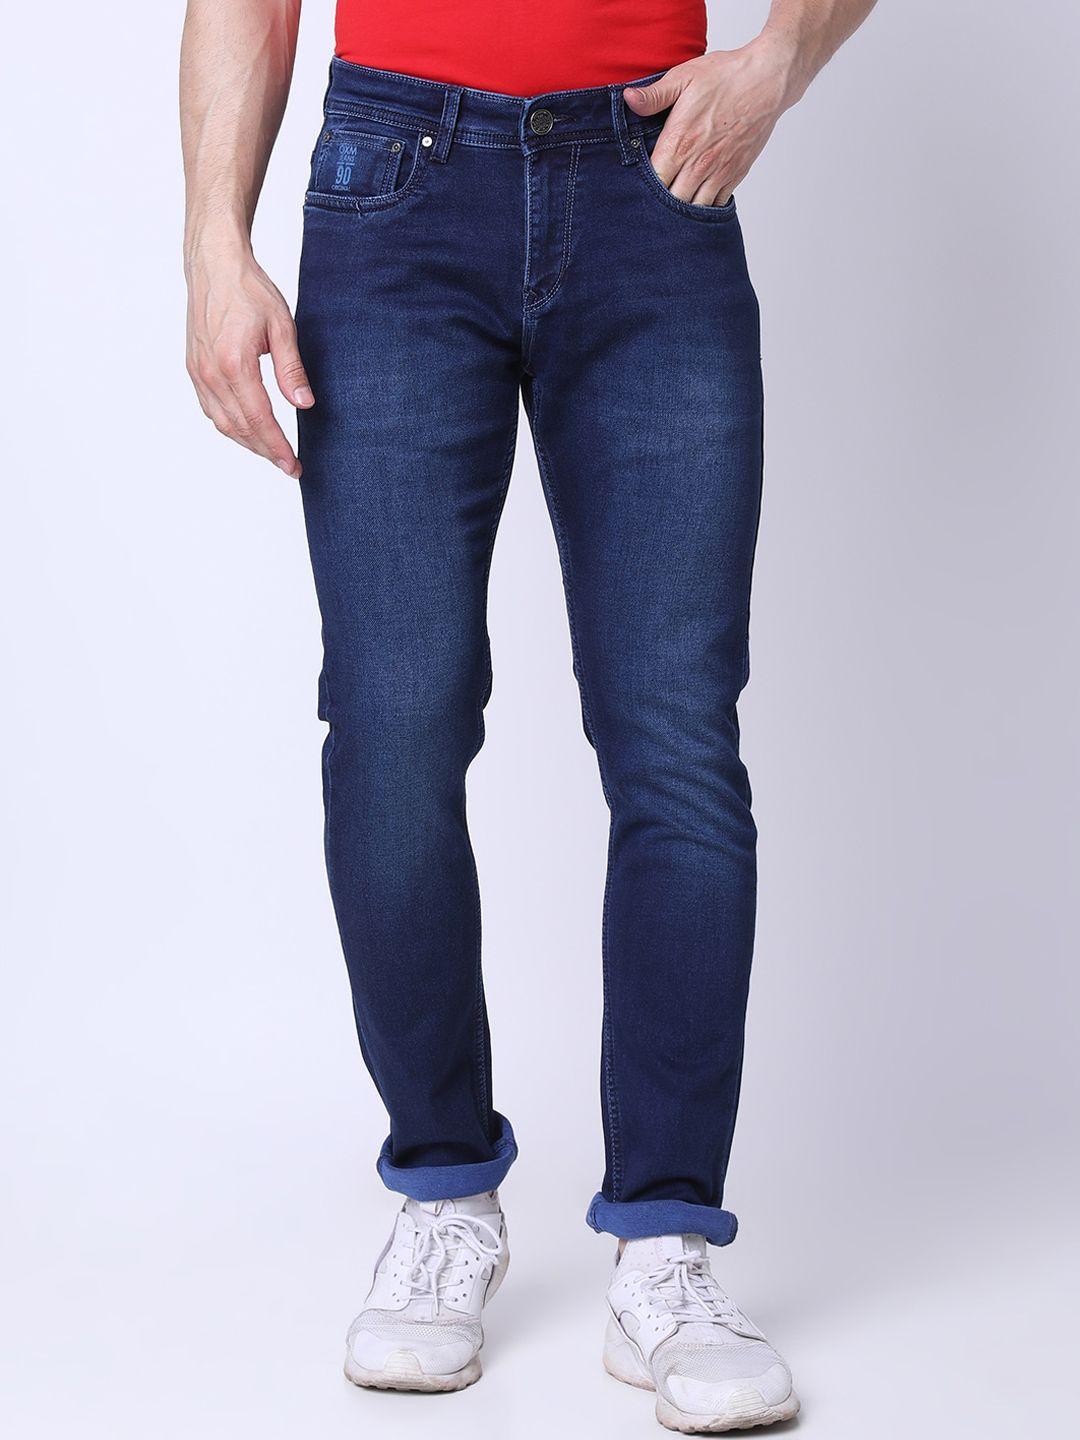 oxemberg-men-lean-slim-fit-light-fade-clean-look-jeans